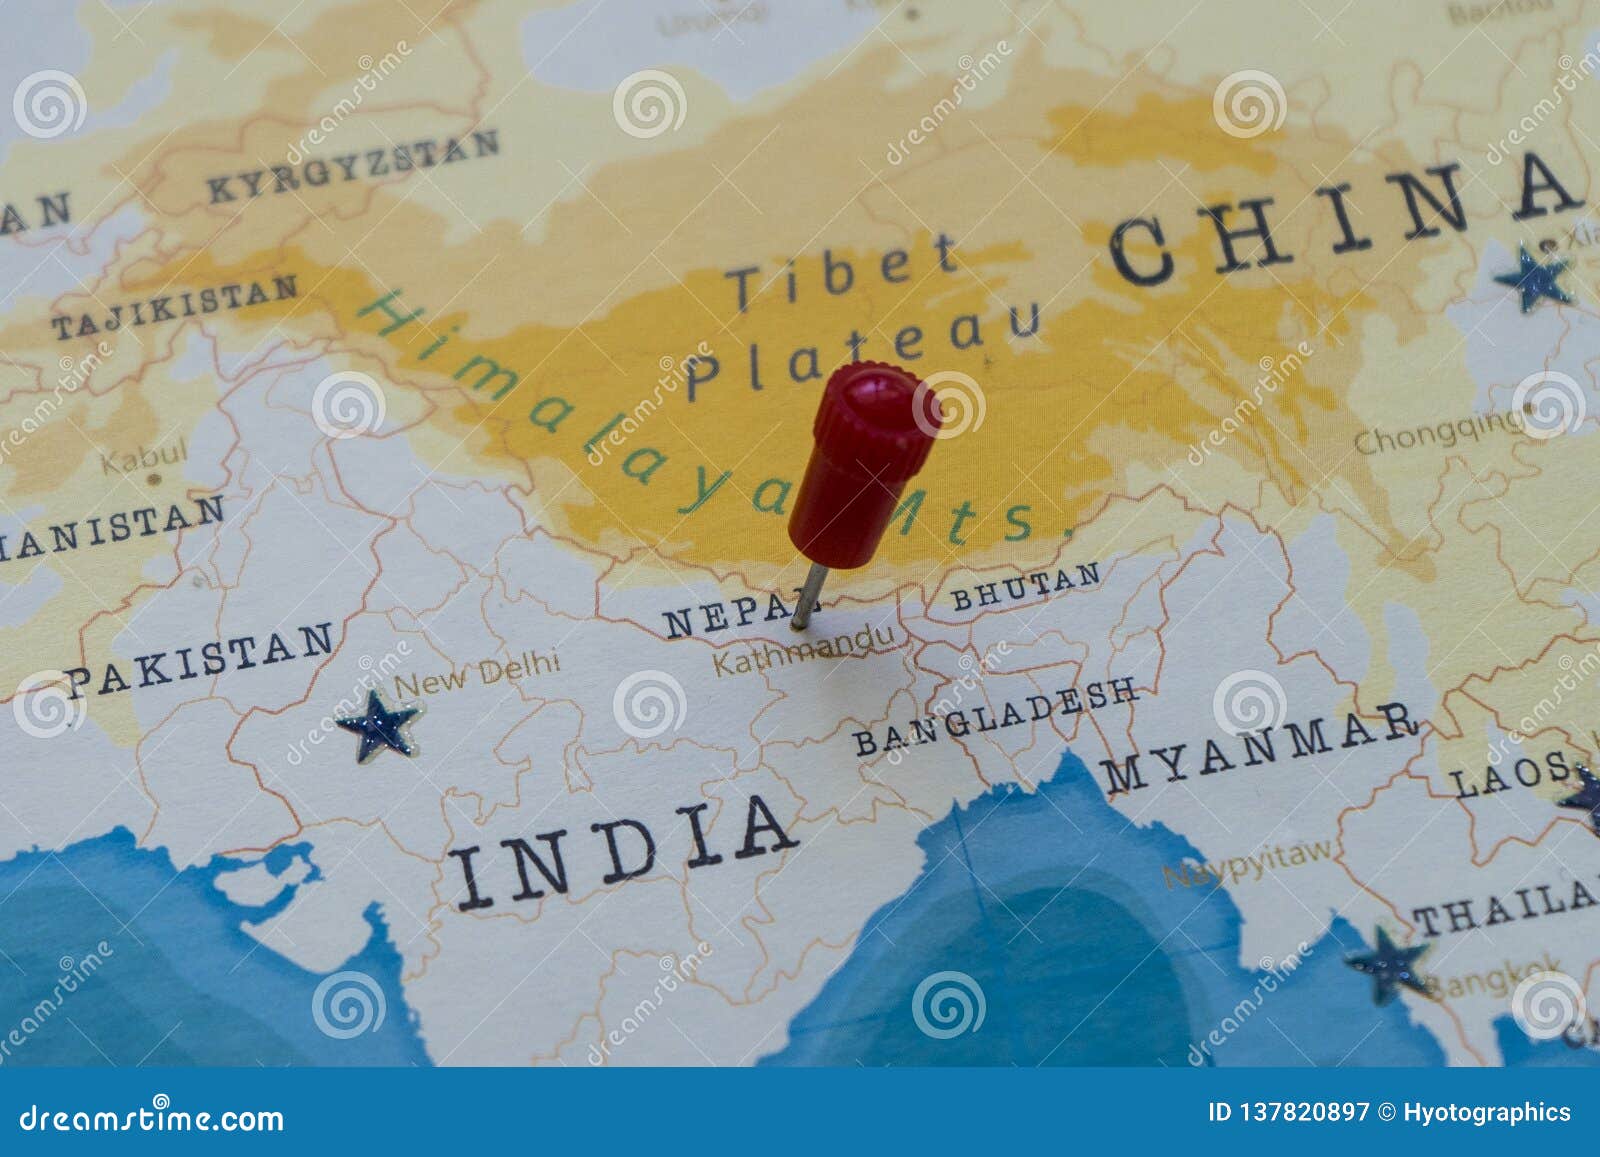 A Pin On Kathmandu Nepal In The World Map Stock Image Image Of